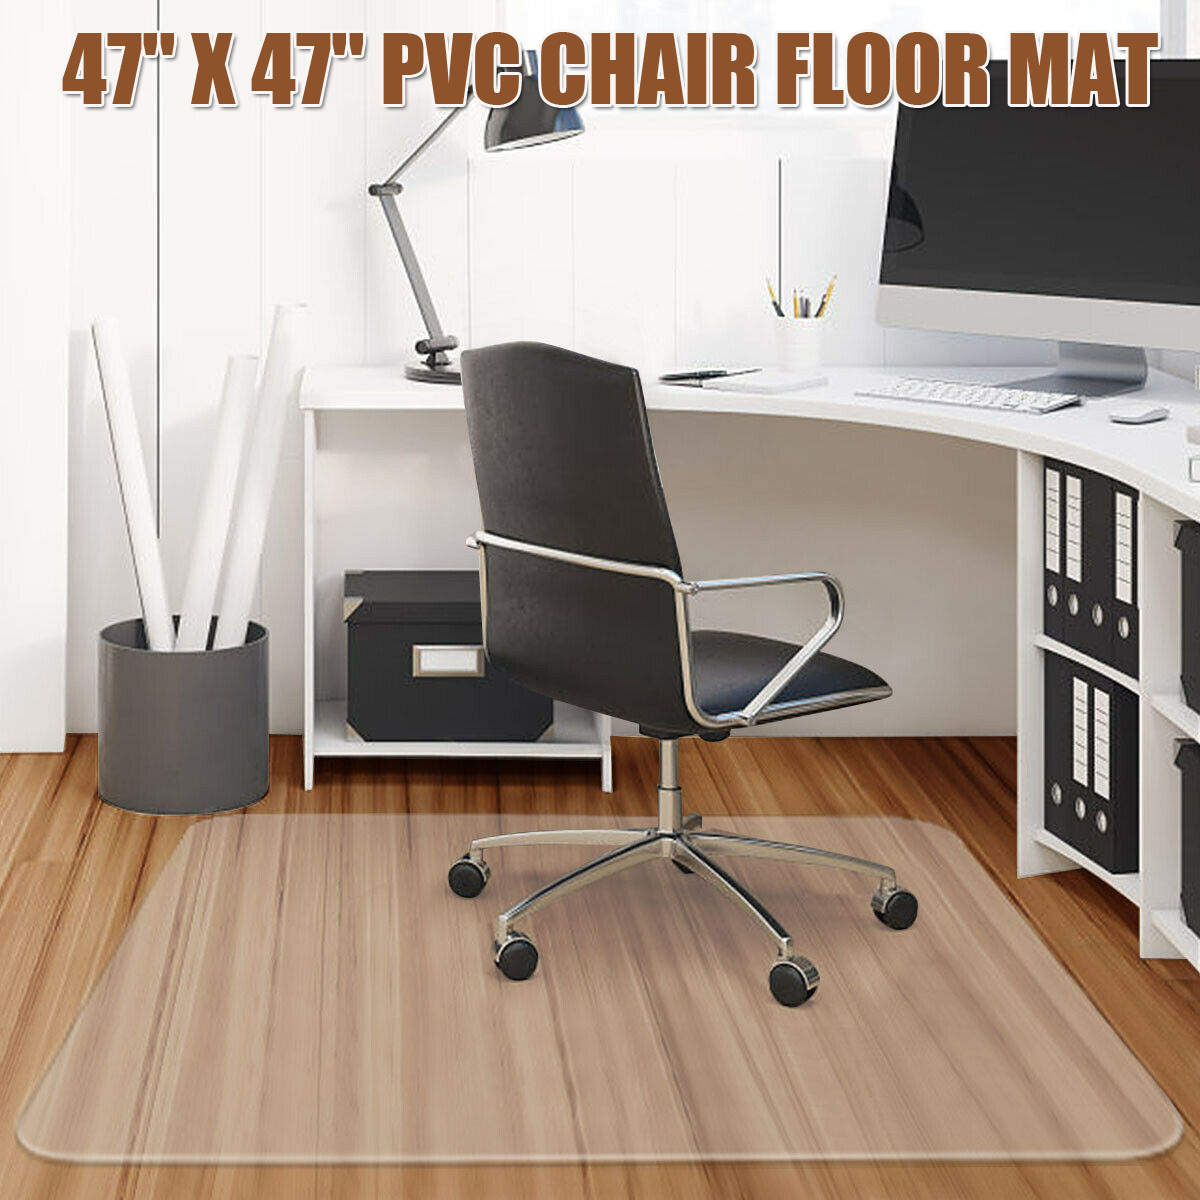 Plastic-Clear-Non-Slip-Office-Chair-Desk-Mat-Floor-Computer-Carpet-Protector-PVC-1794306-1